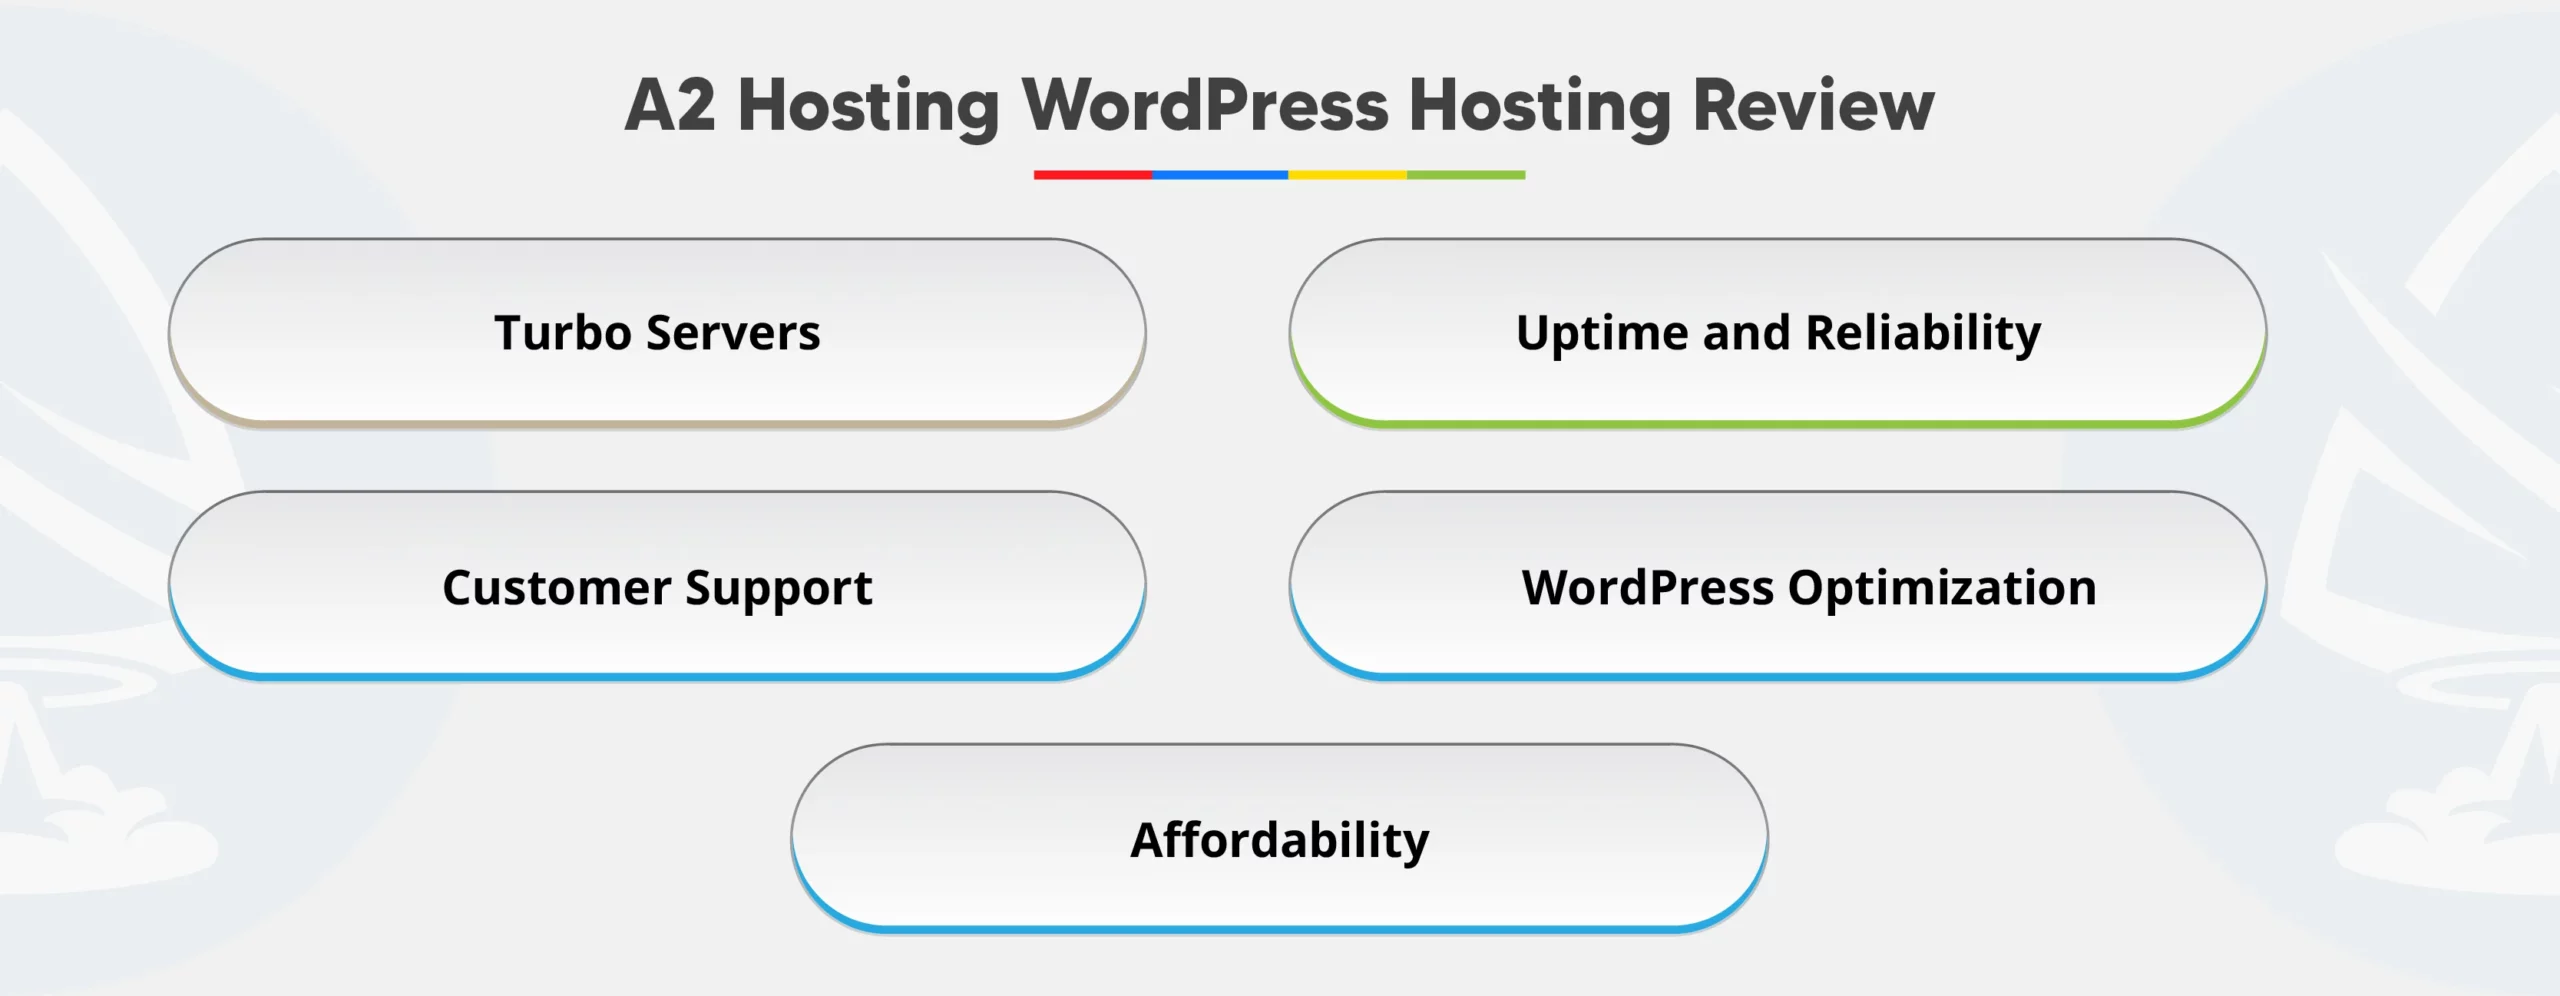 A2 Hosting WordPress Hosting Review